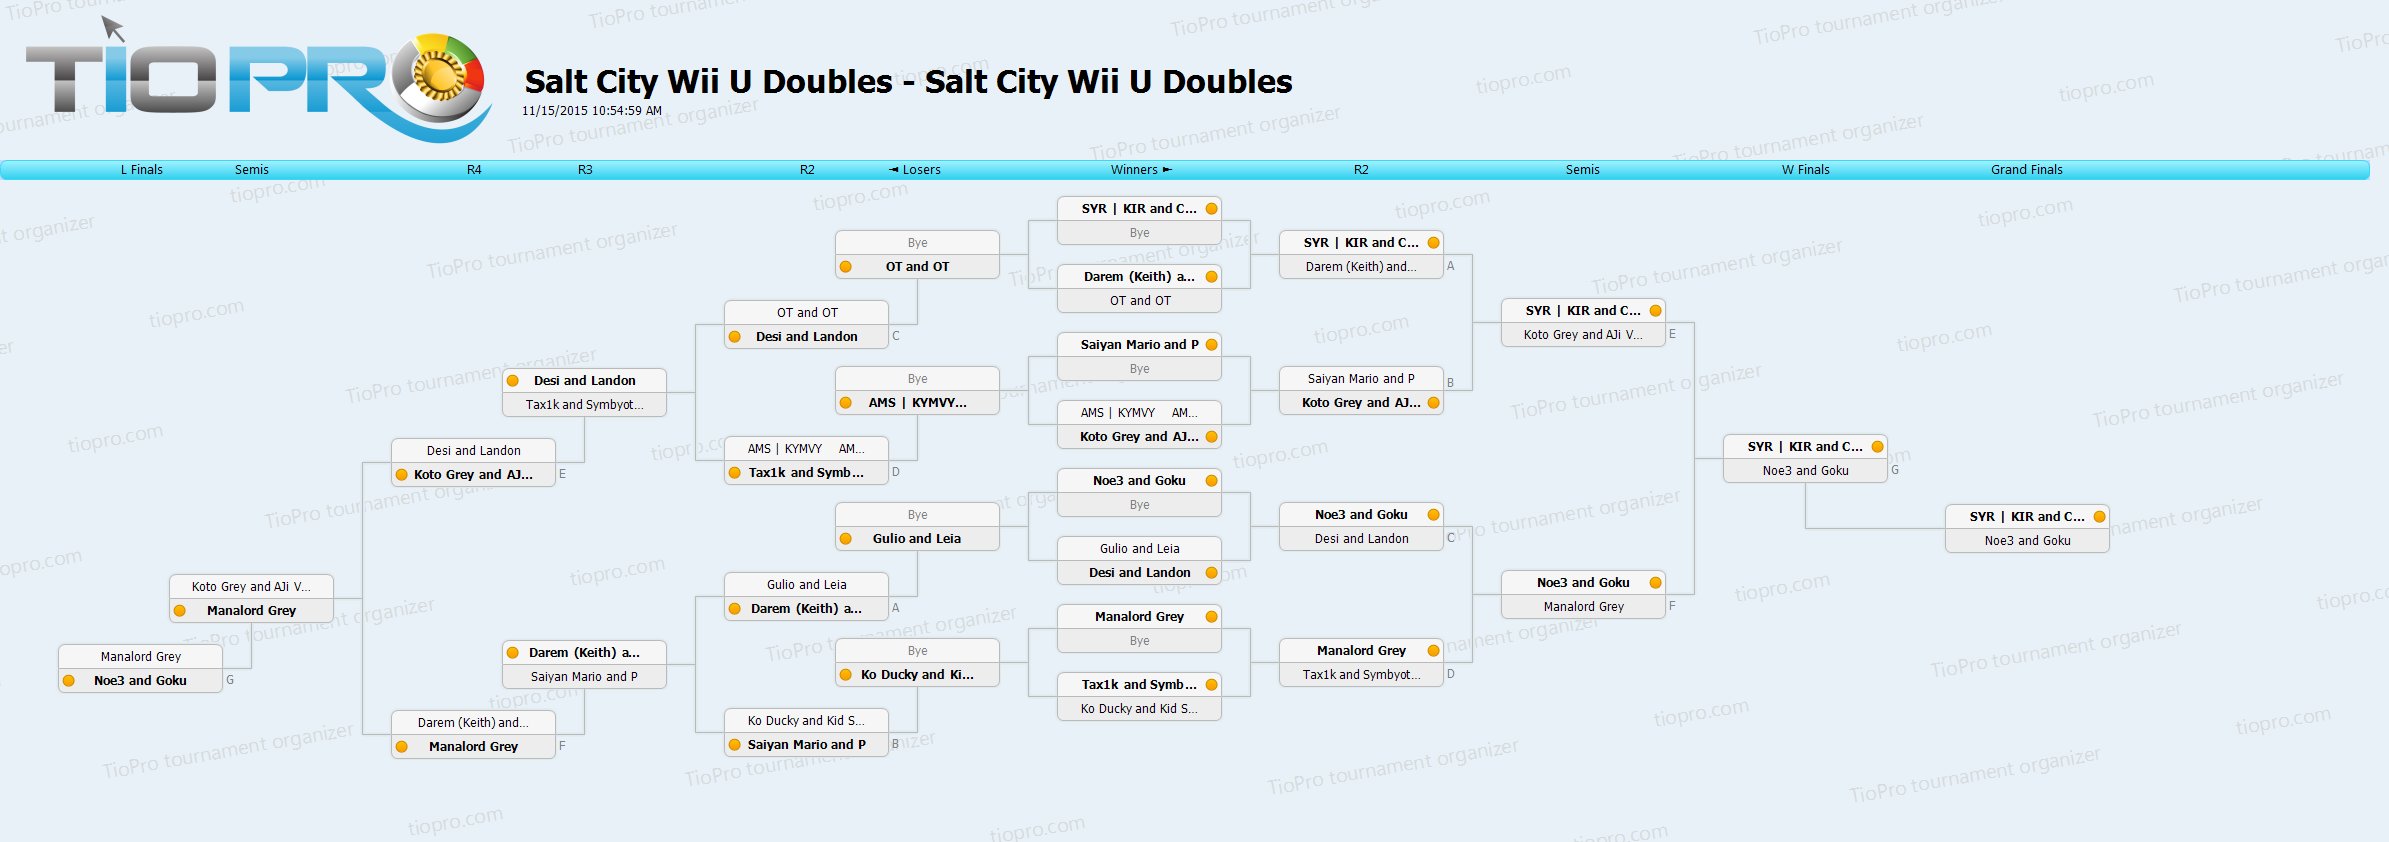 Salt City 2015 Wii U Doubles